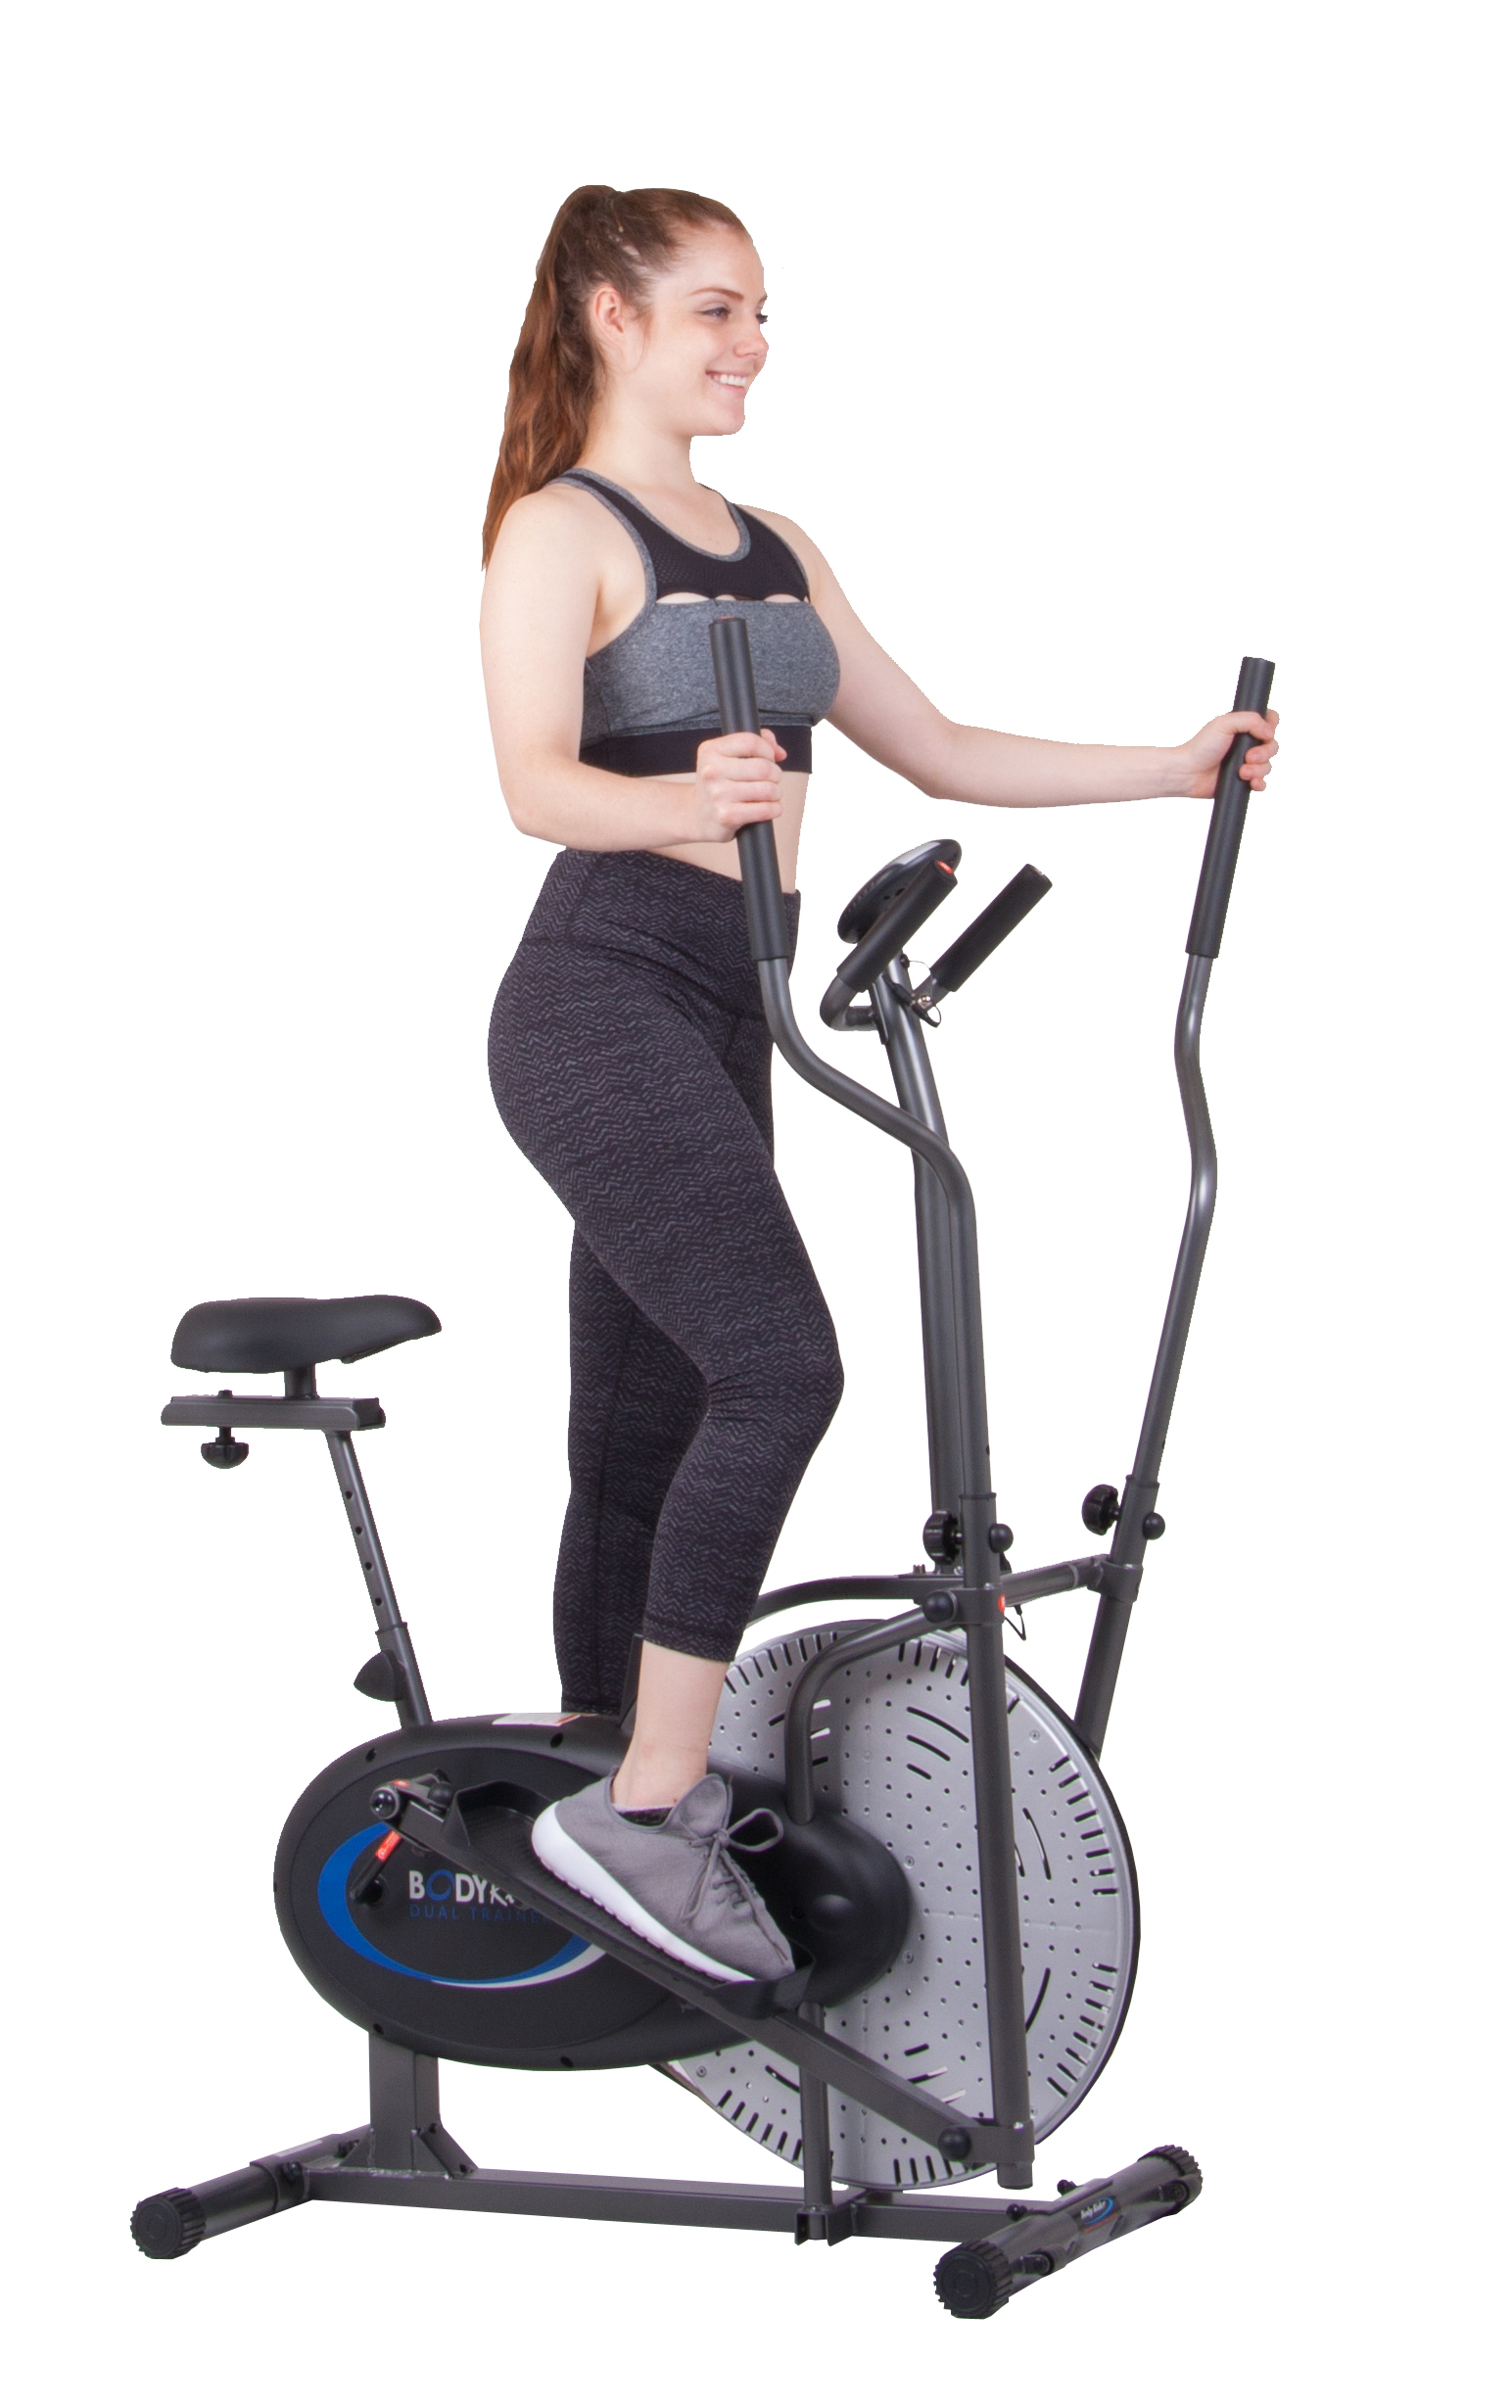 Body Rider 2-in-1 Cardio Dual Trainer - Walmart.com